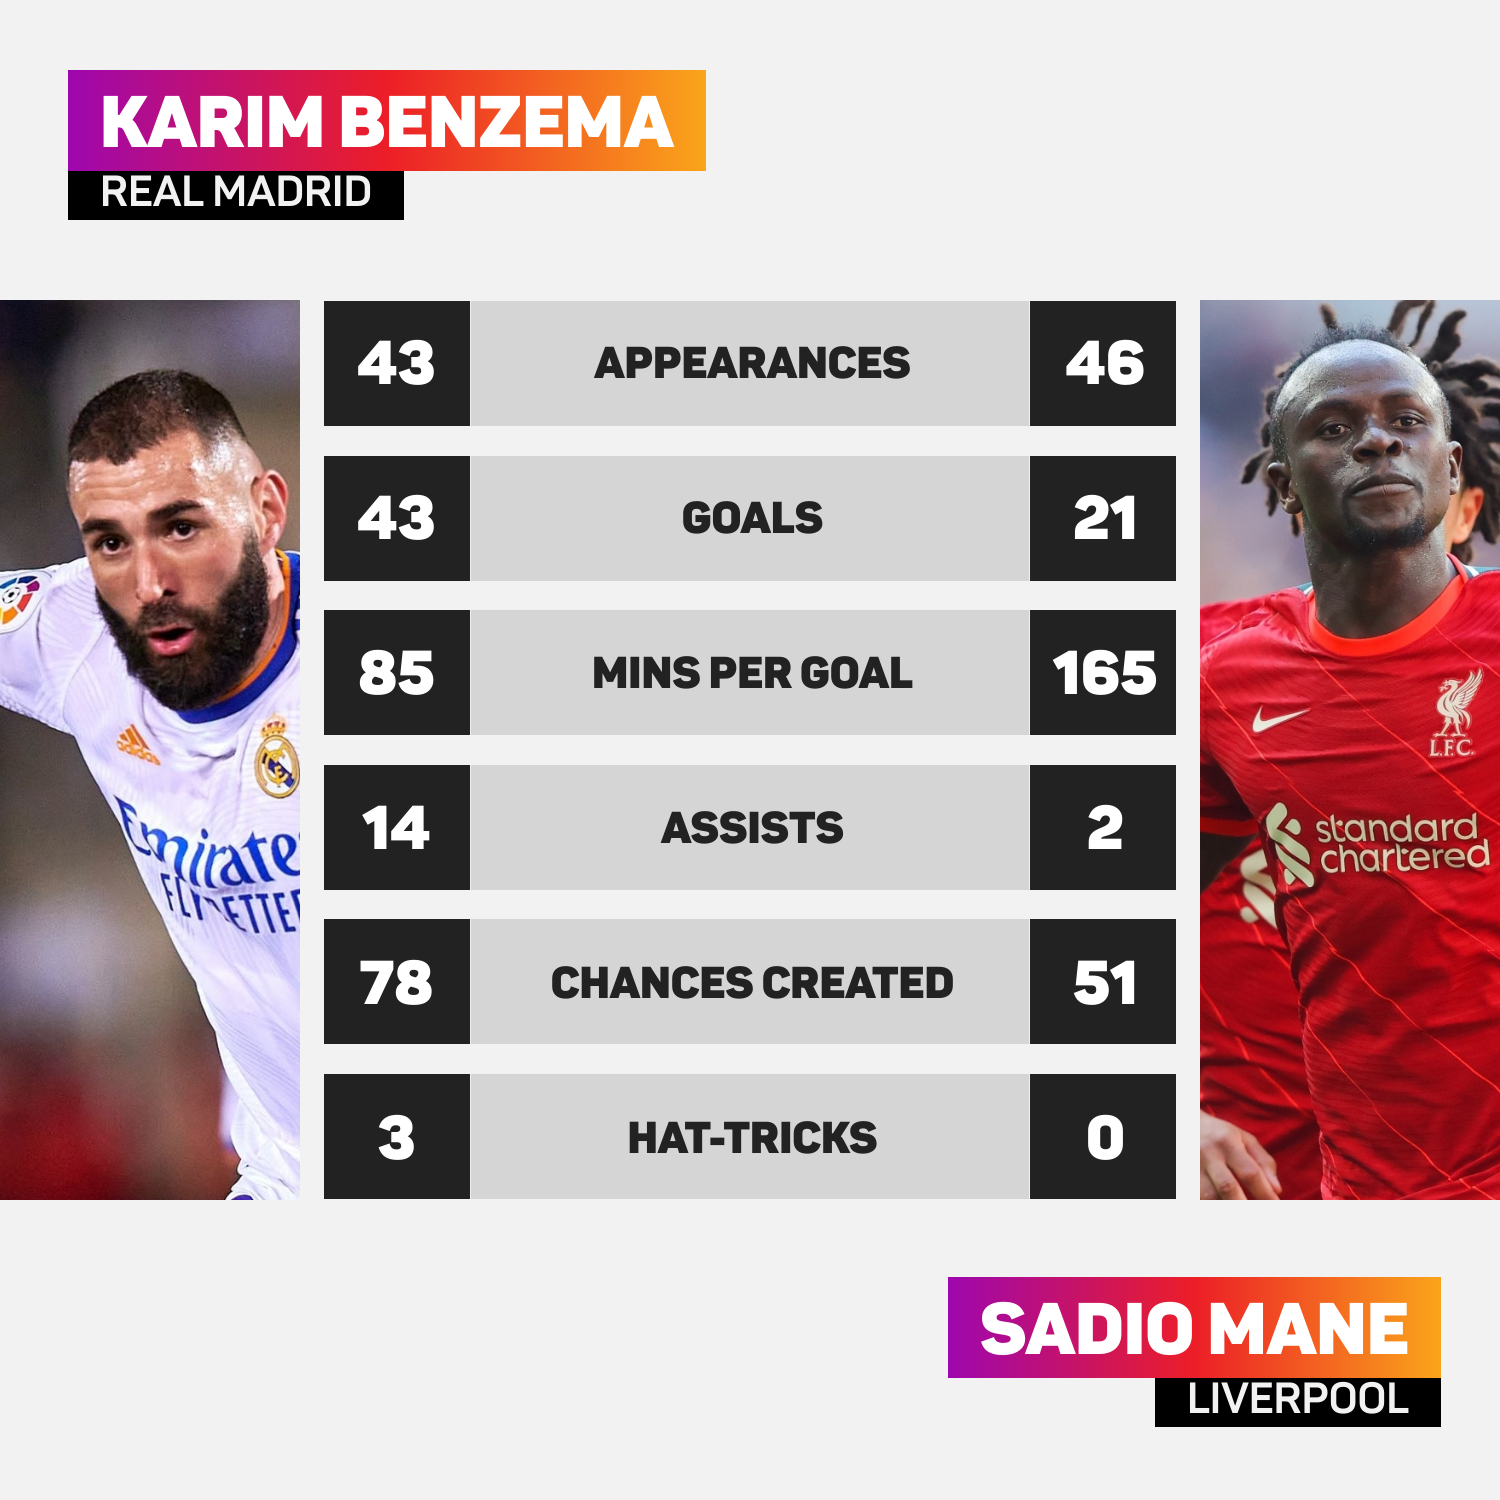 Karim Benzema has massively outperformed Sadio Mane this season